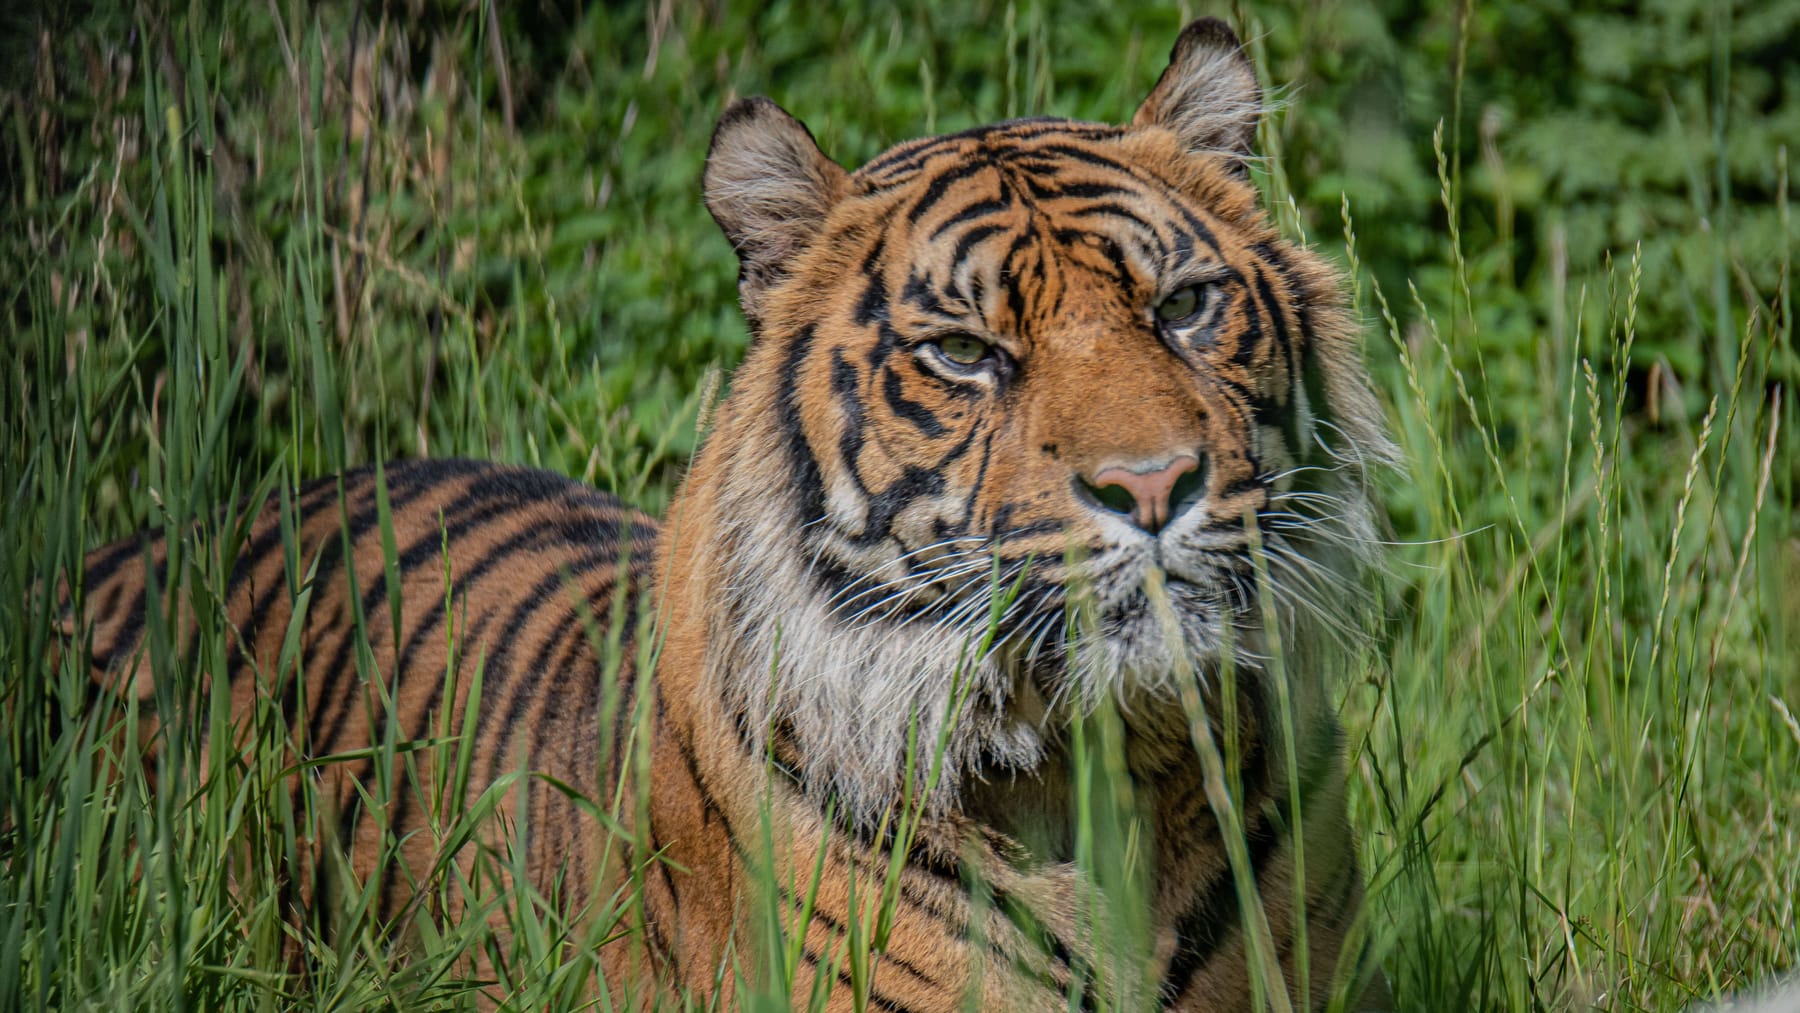 Serangan harimau di Indonesia: Satu selamat dengan cedera kepala